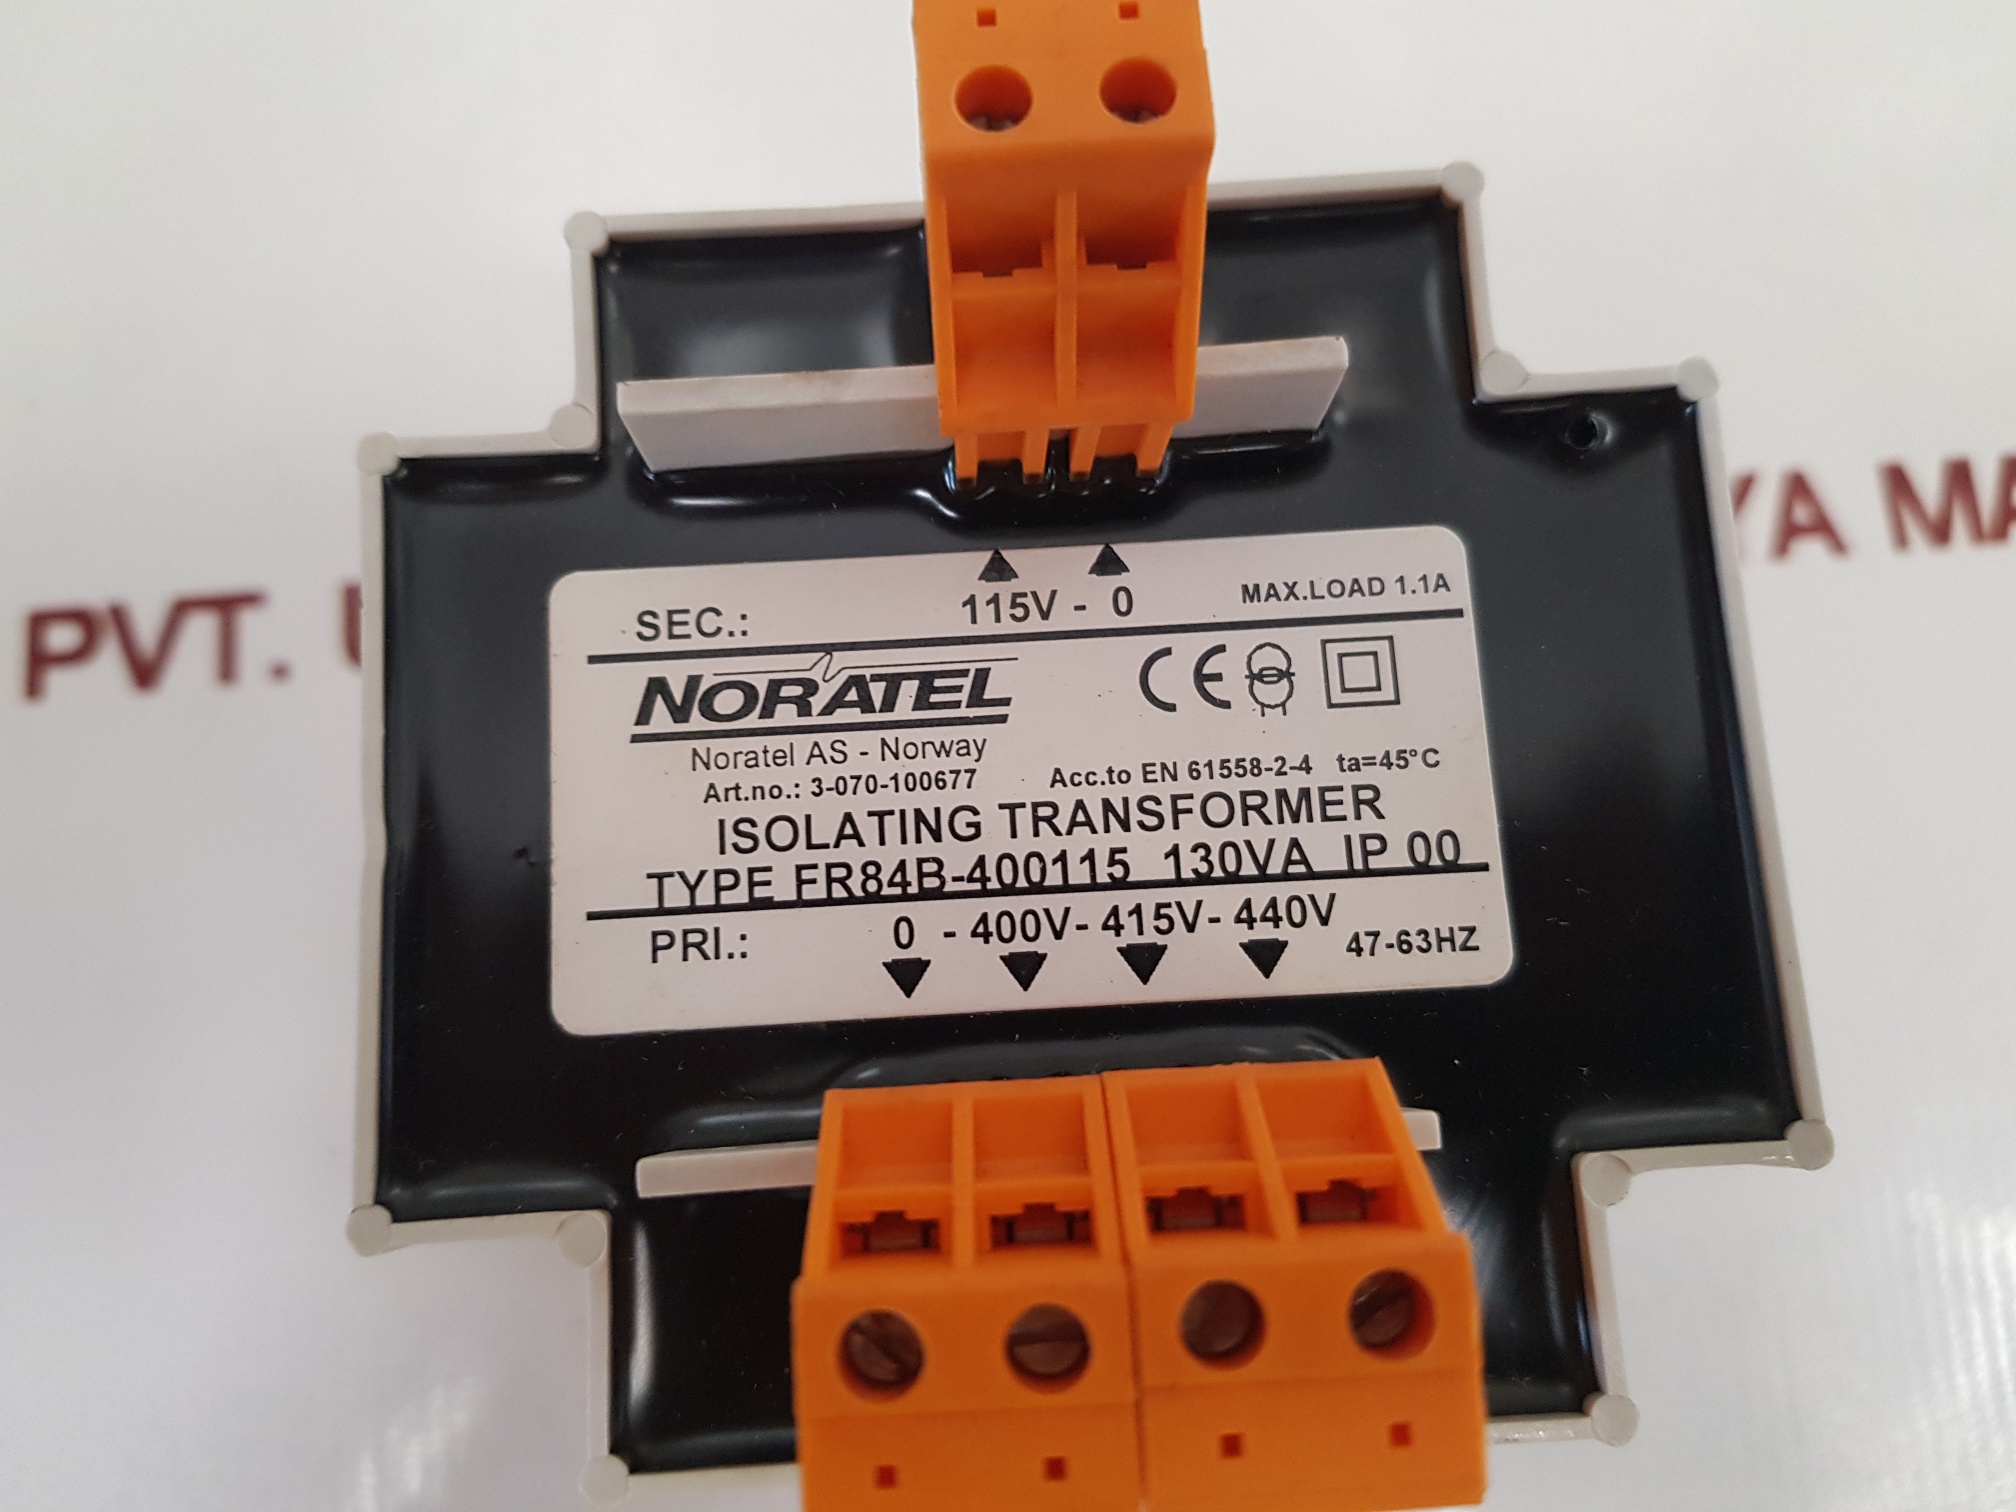 NORATEL FR84B-400115 ISOLATING TRANSFORMER 3-070-100677